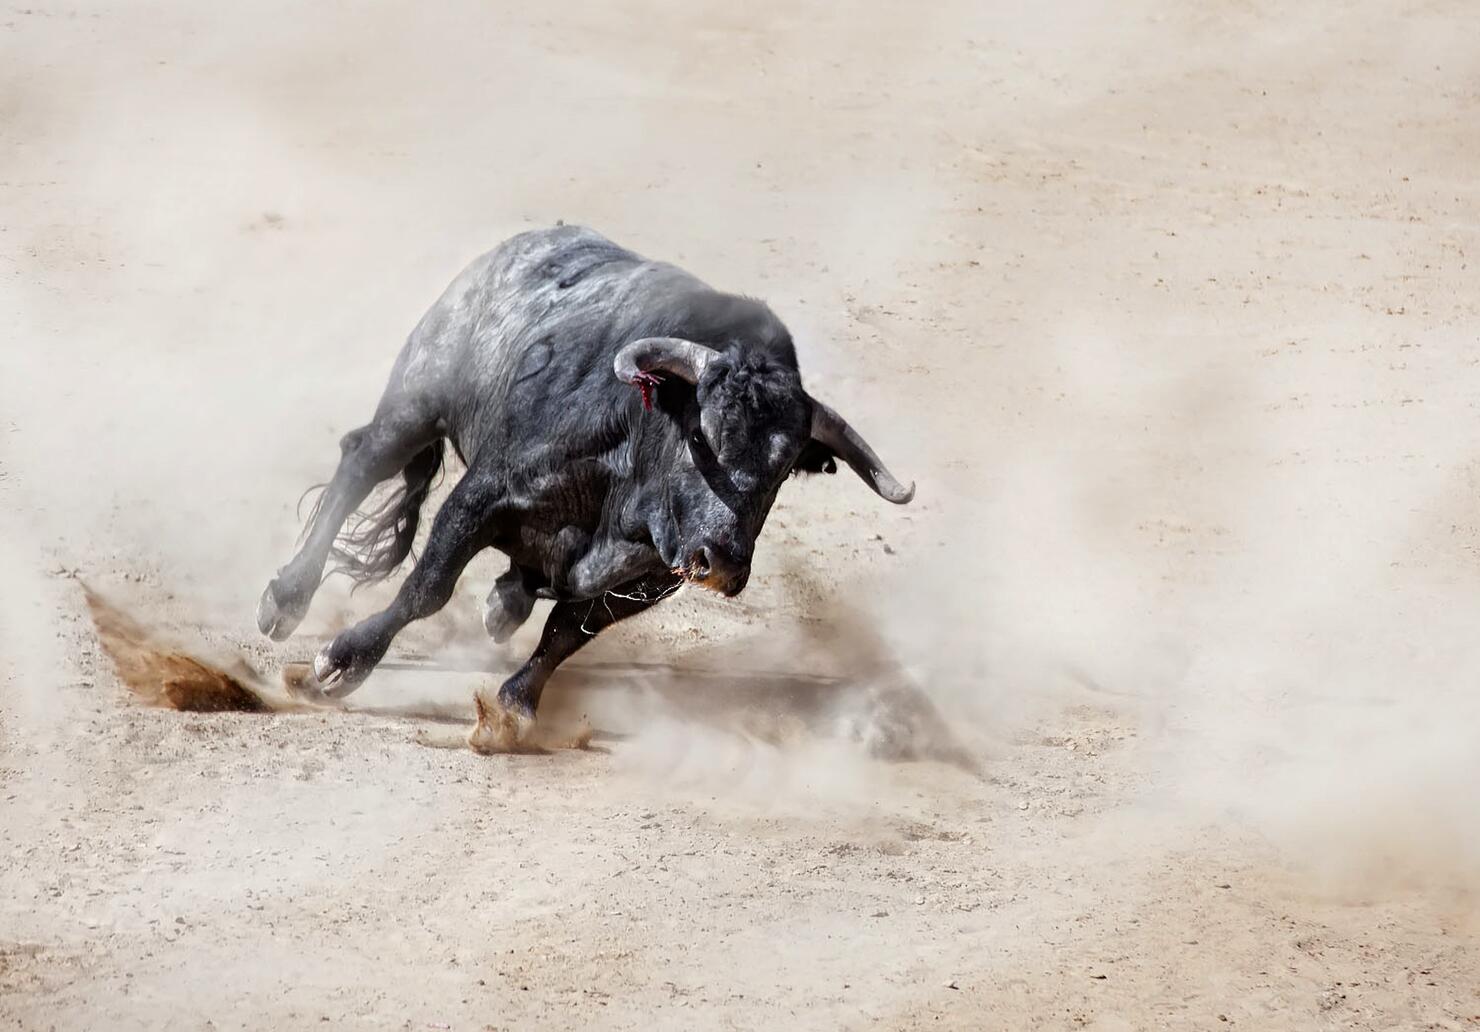 Bull charging across sand creating dust cloud